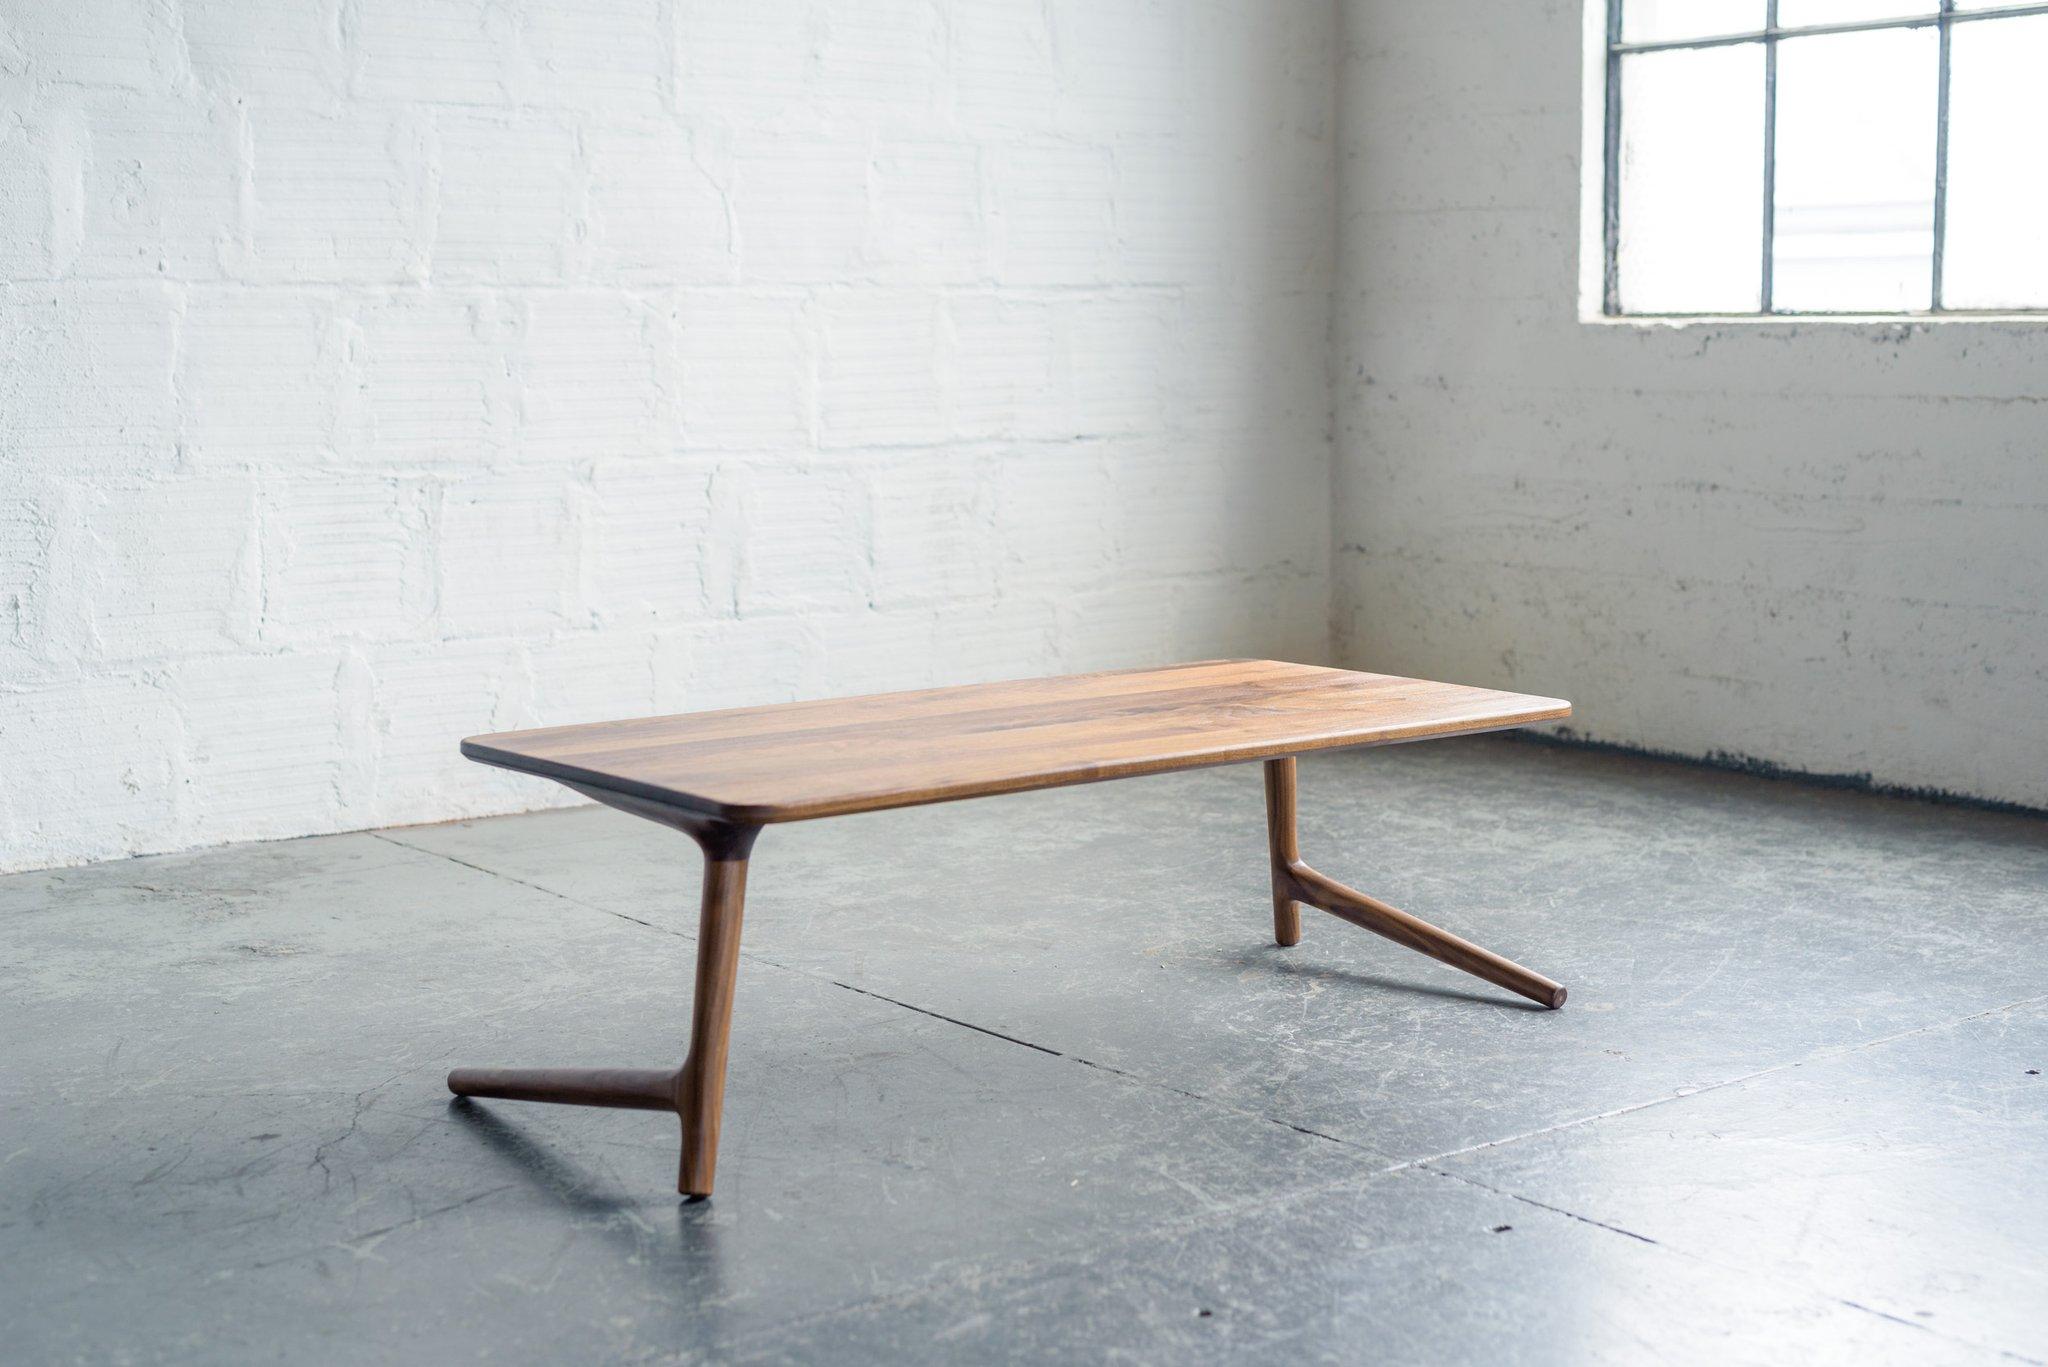 Walnut coffee table by Fernweh Woodworking
Dimensions: 
W 24